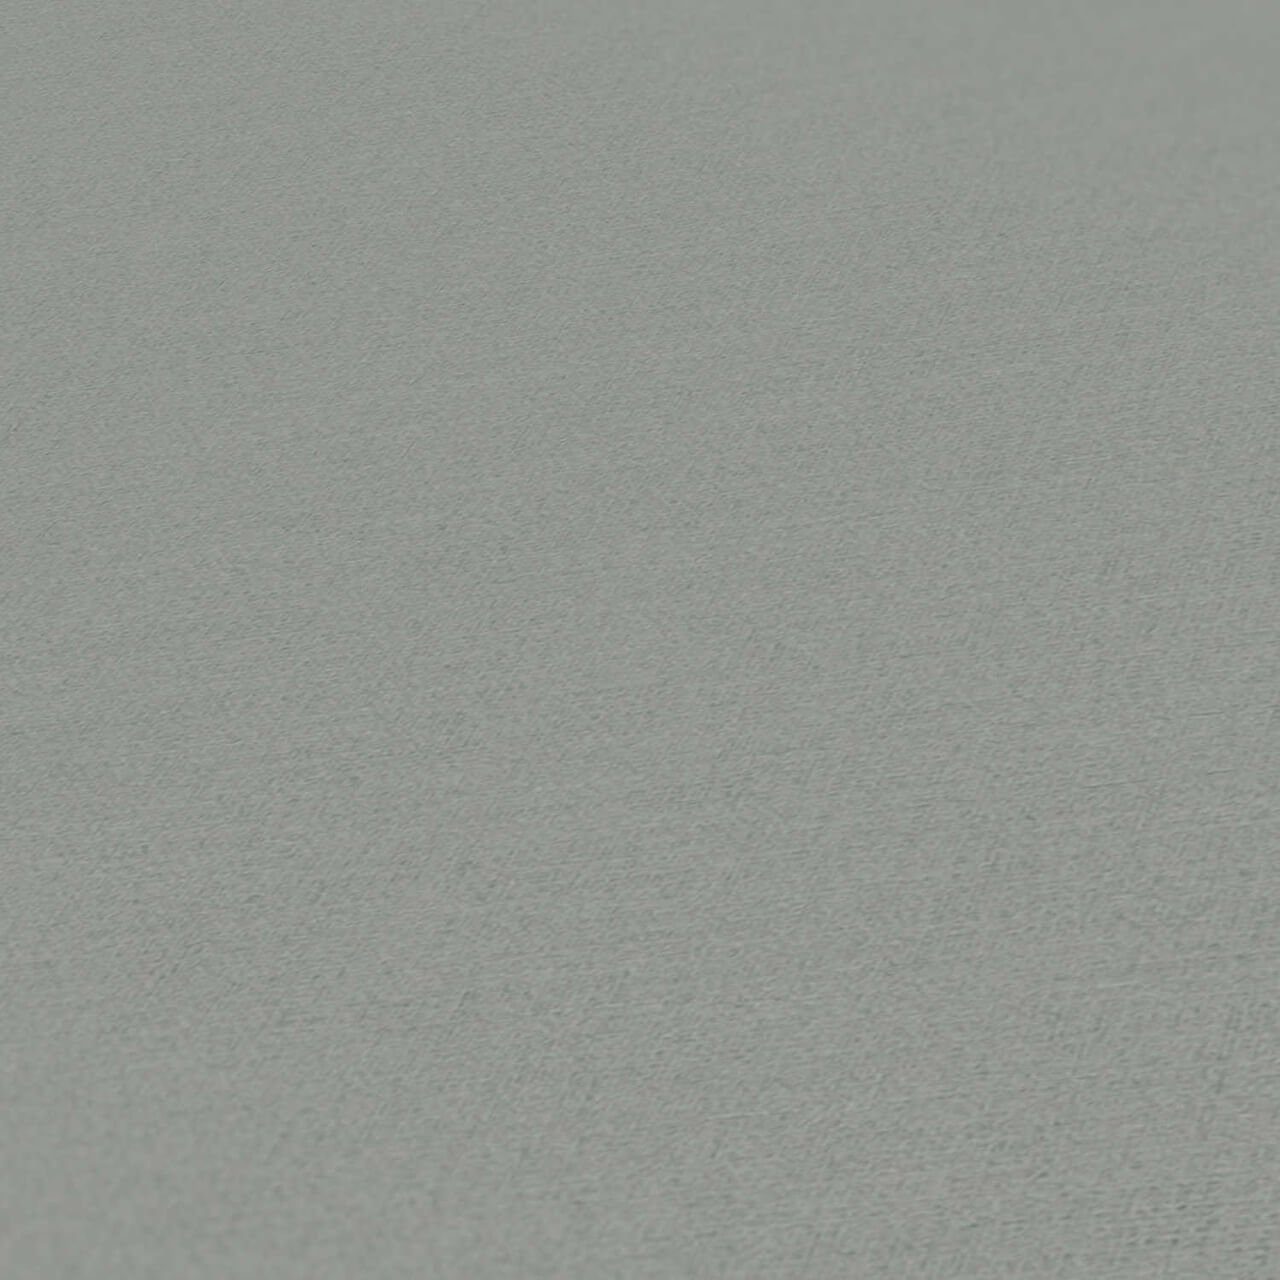 0.53x10.05 grau m, Ethereal Embrace KUNSTLOFT Design Tapete matt, Vliestapete lichtbeständige